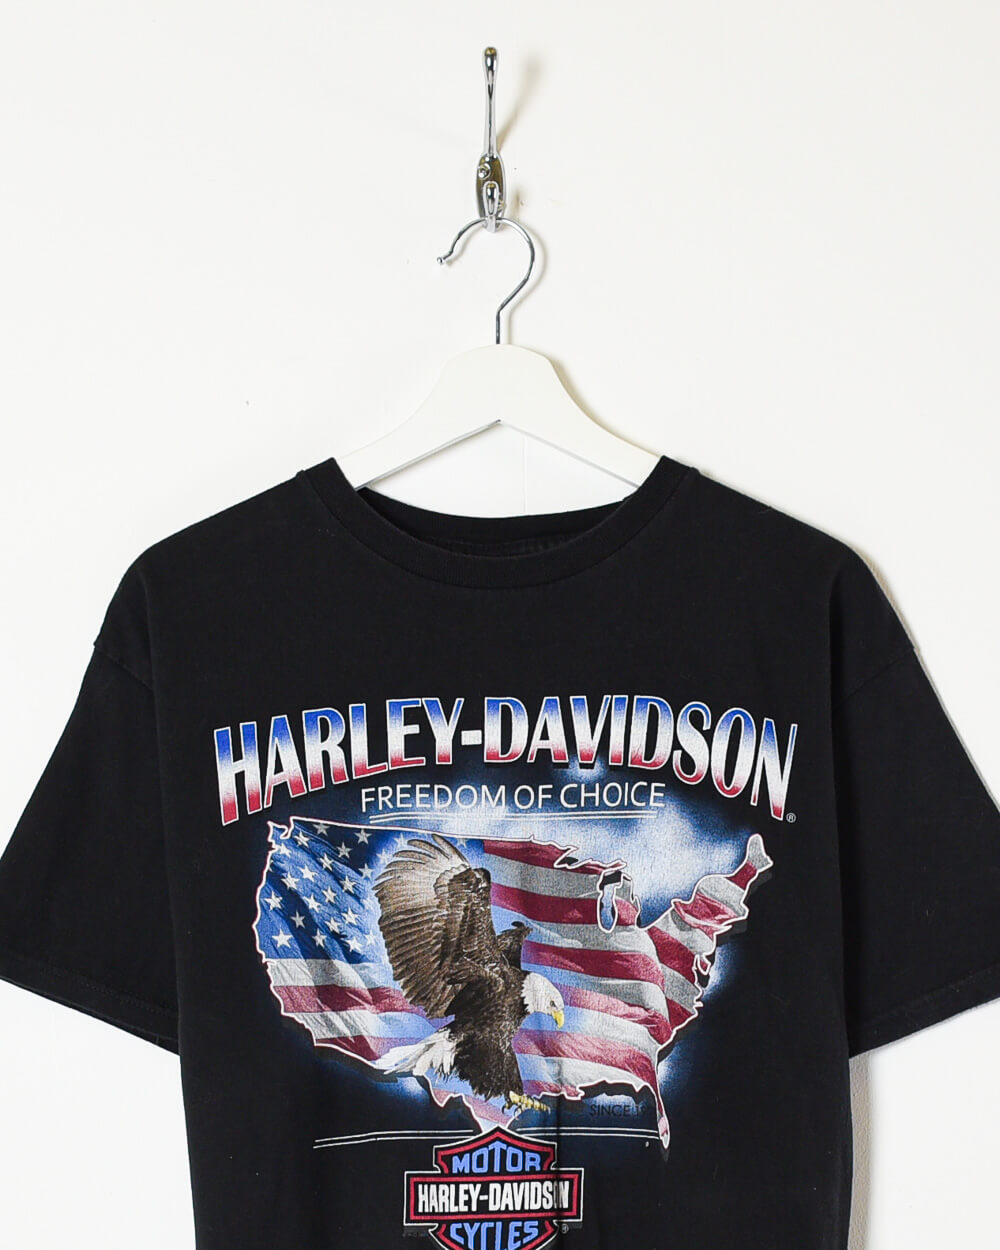 Black Harley Davidson Motorcycles Freedom of Choice T-Shirt - Medium